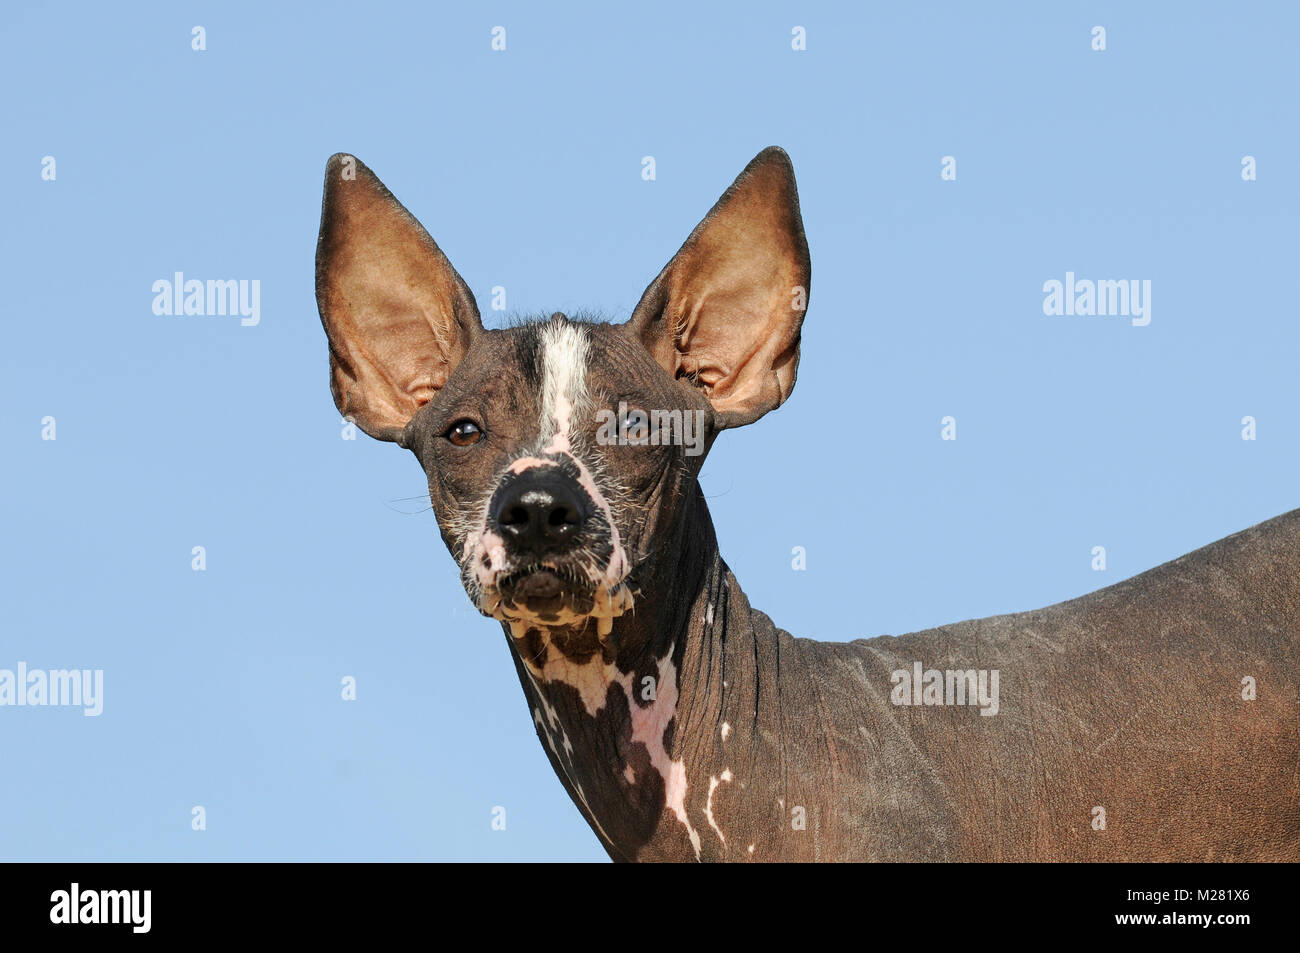 Perro sin pelo del Perú, Peruvian hairless dog, young dog, animal portrait Stock Photo